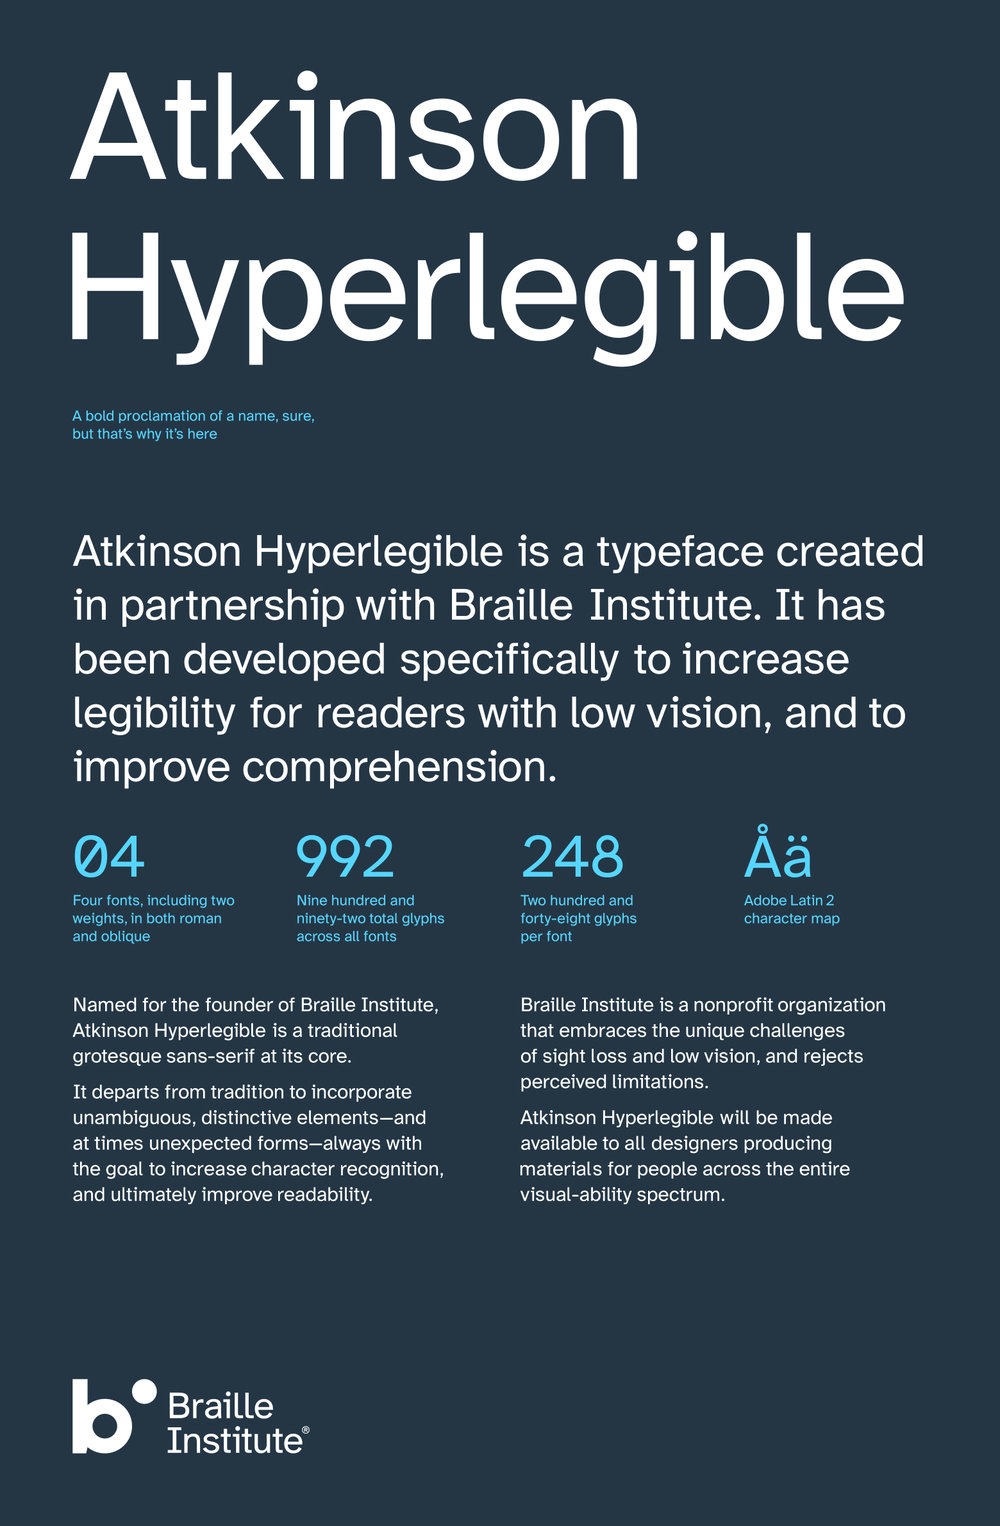 Atkinson Hyperlegible